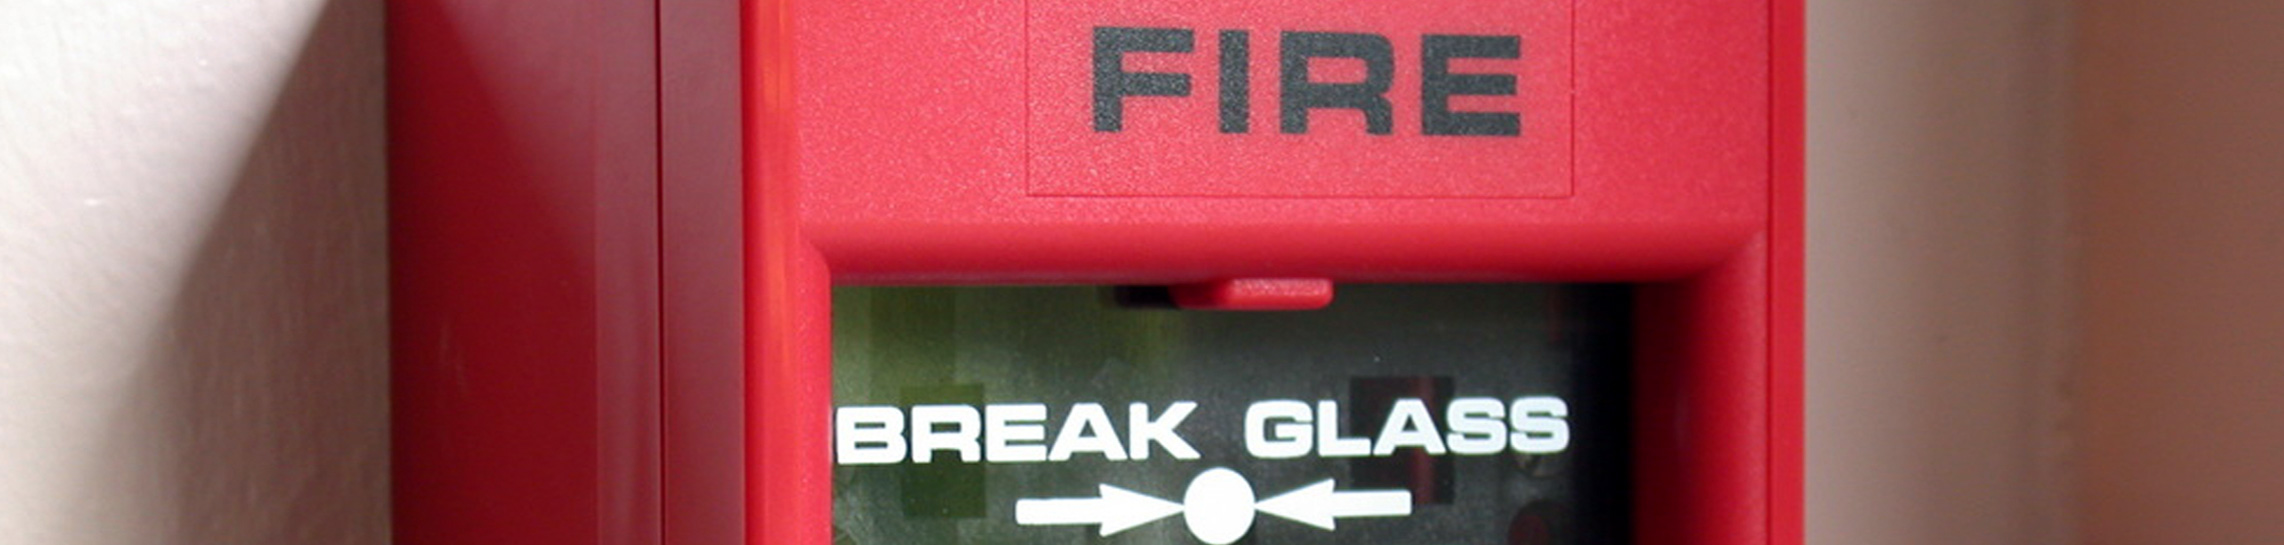 Fire alarms and Burglar alarms - Shaftesbury